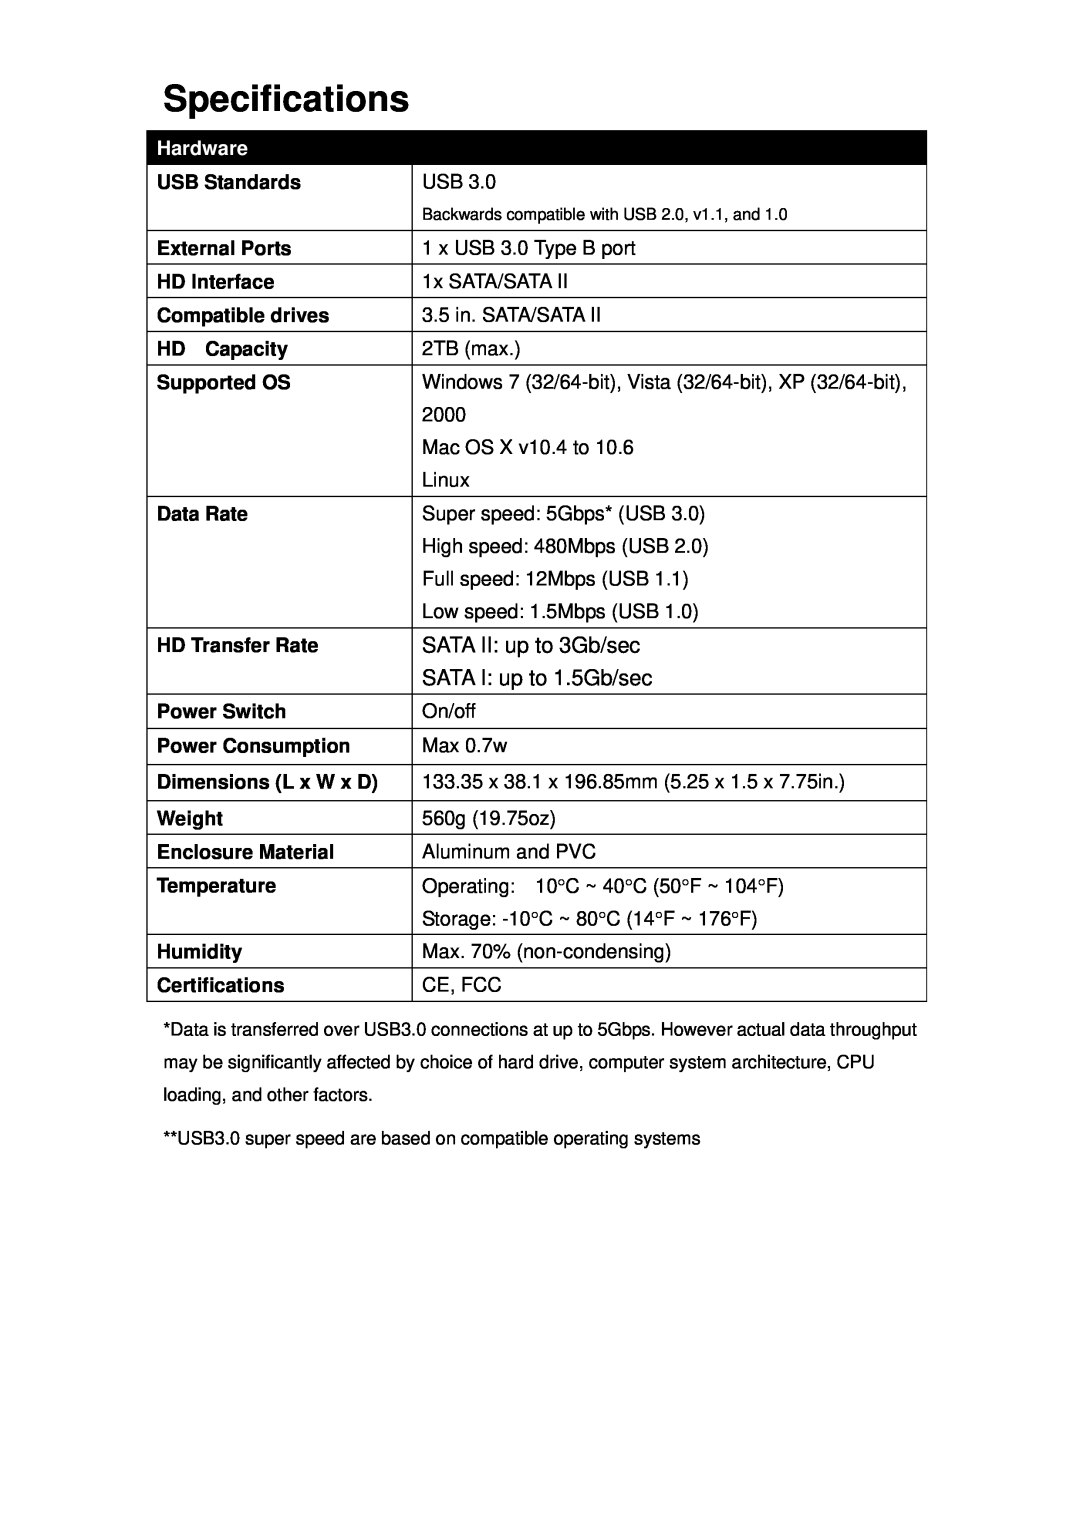 TRENDnet TU3S35 manual Specifications, SATA II up to 3Gb/sec, SATA I up to 1.5Gb/sec, Hardware 